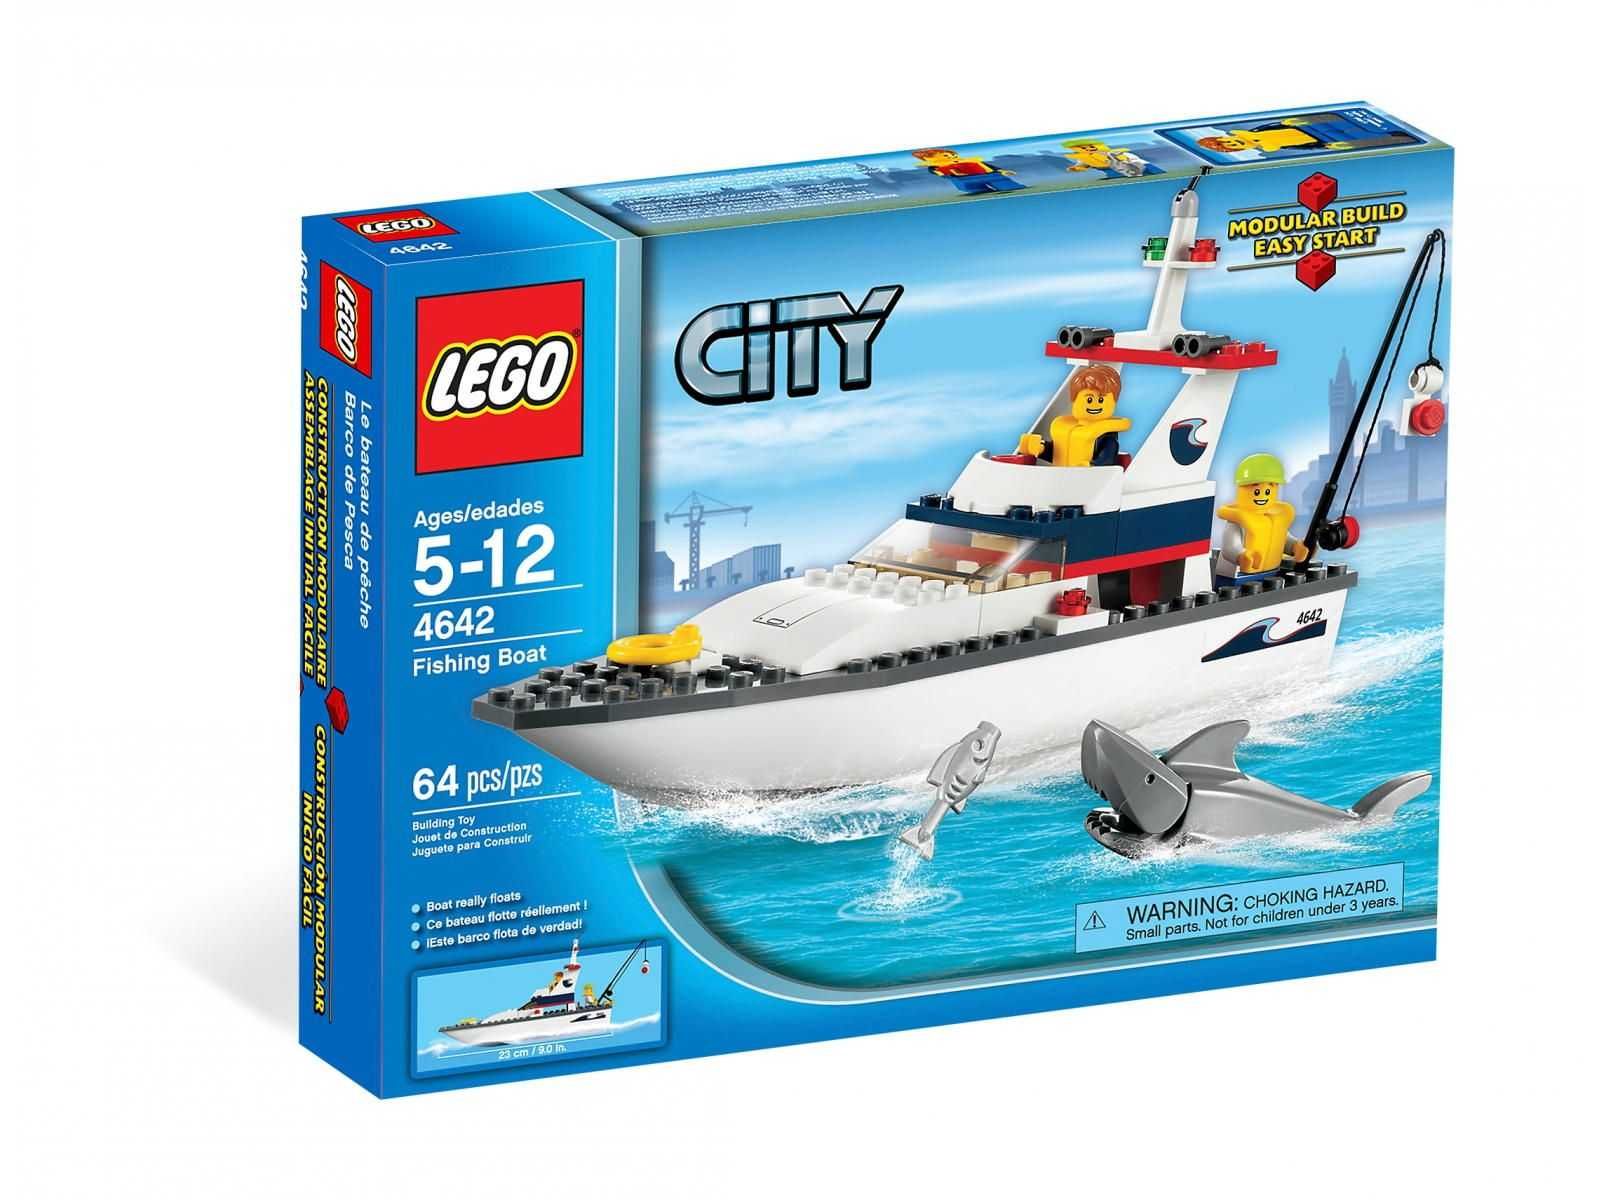 LEGO City 4642 Jacht Motorowy